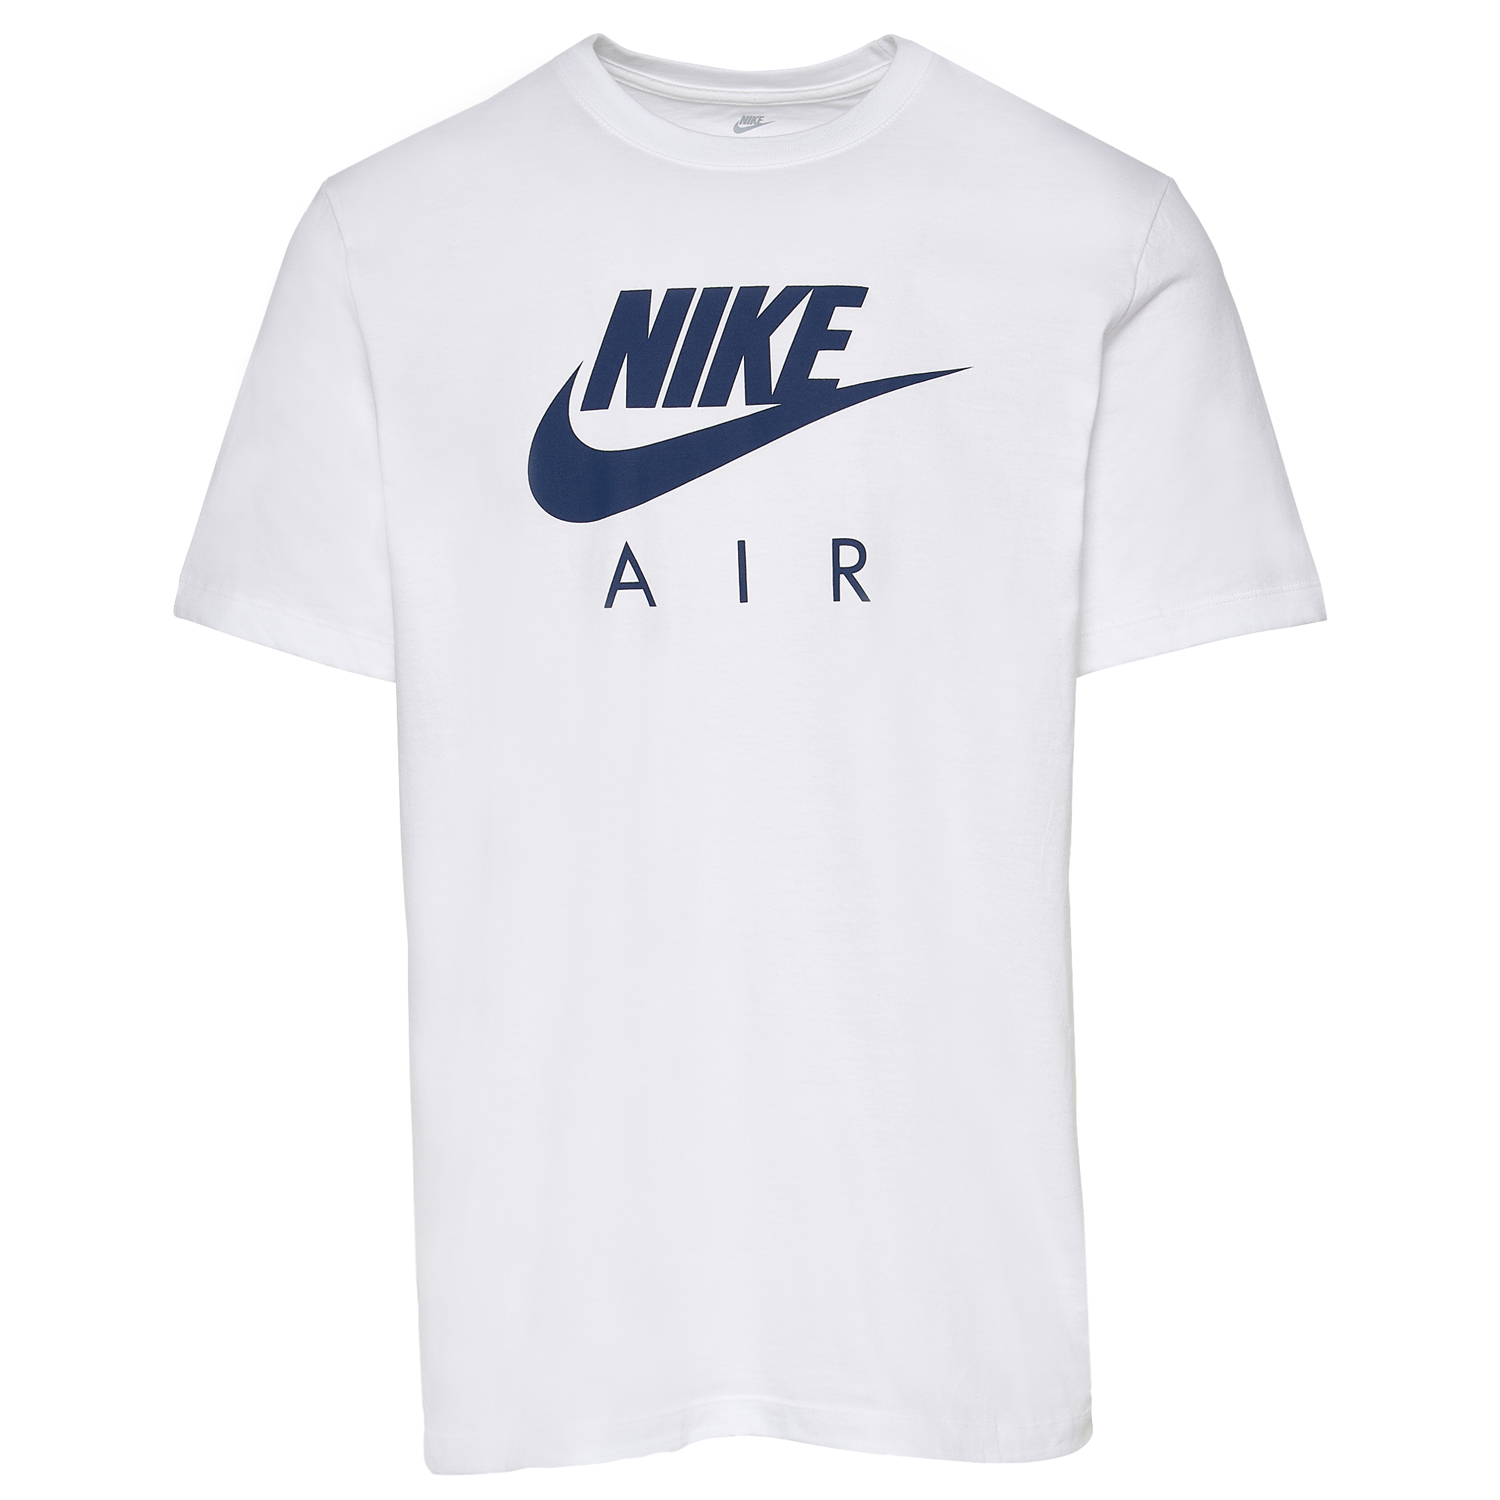 nike-air-t-shirt-white-midnight-navy